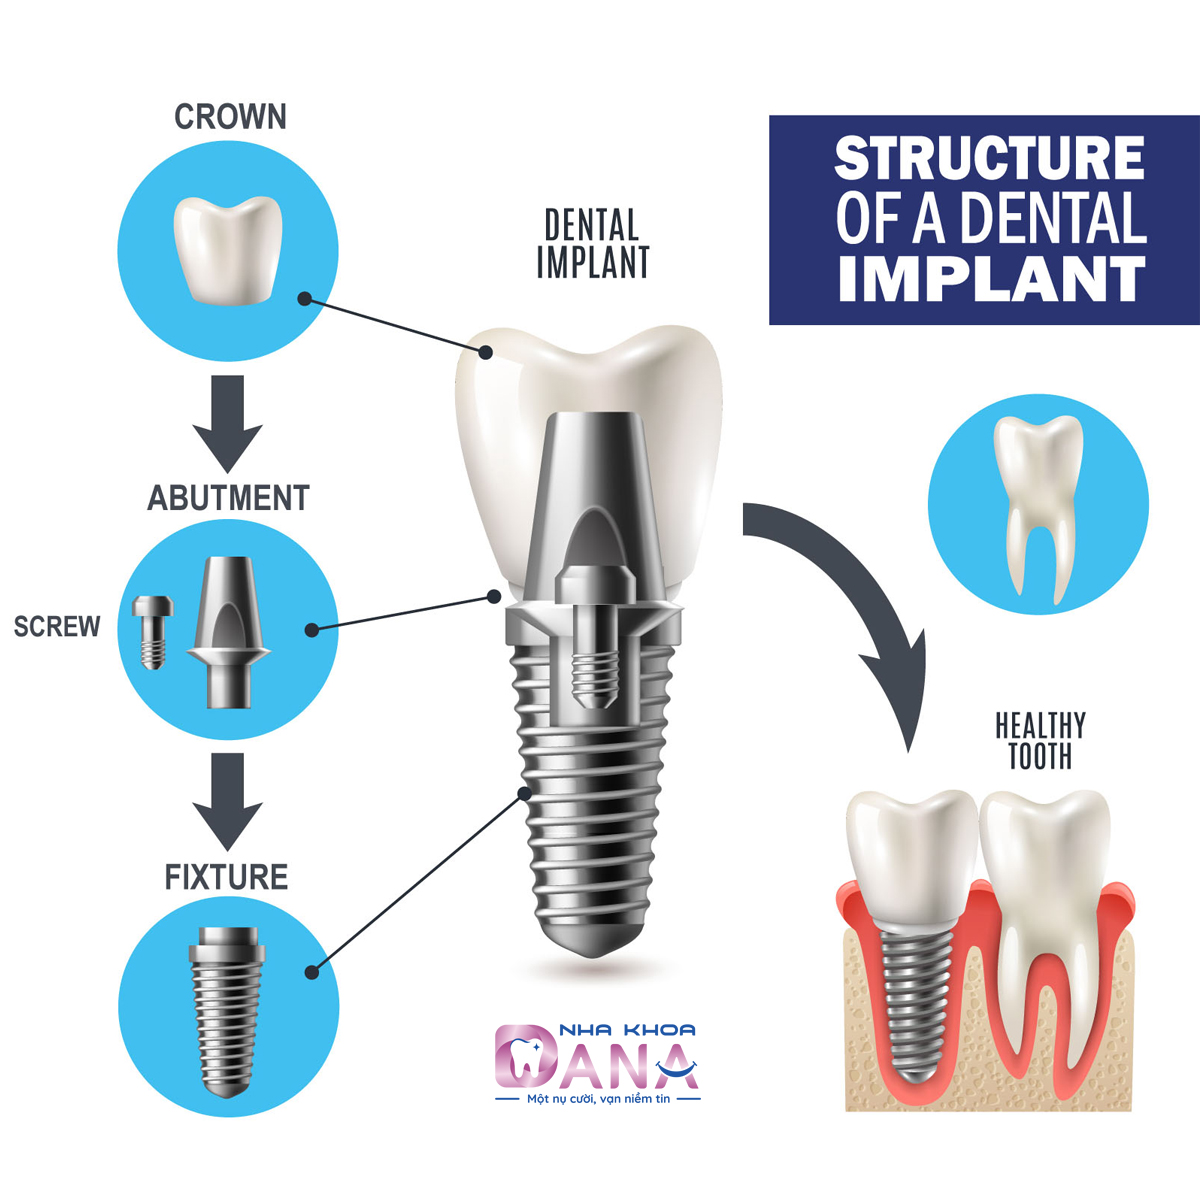 structure dental implant: Dana Dental - implant specalist in Danang